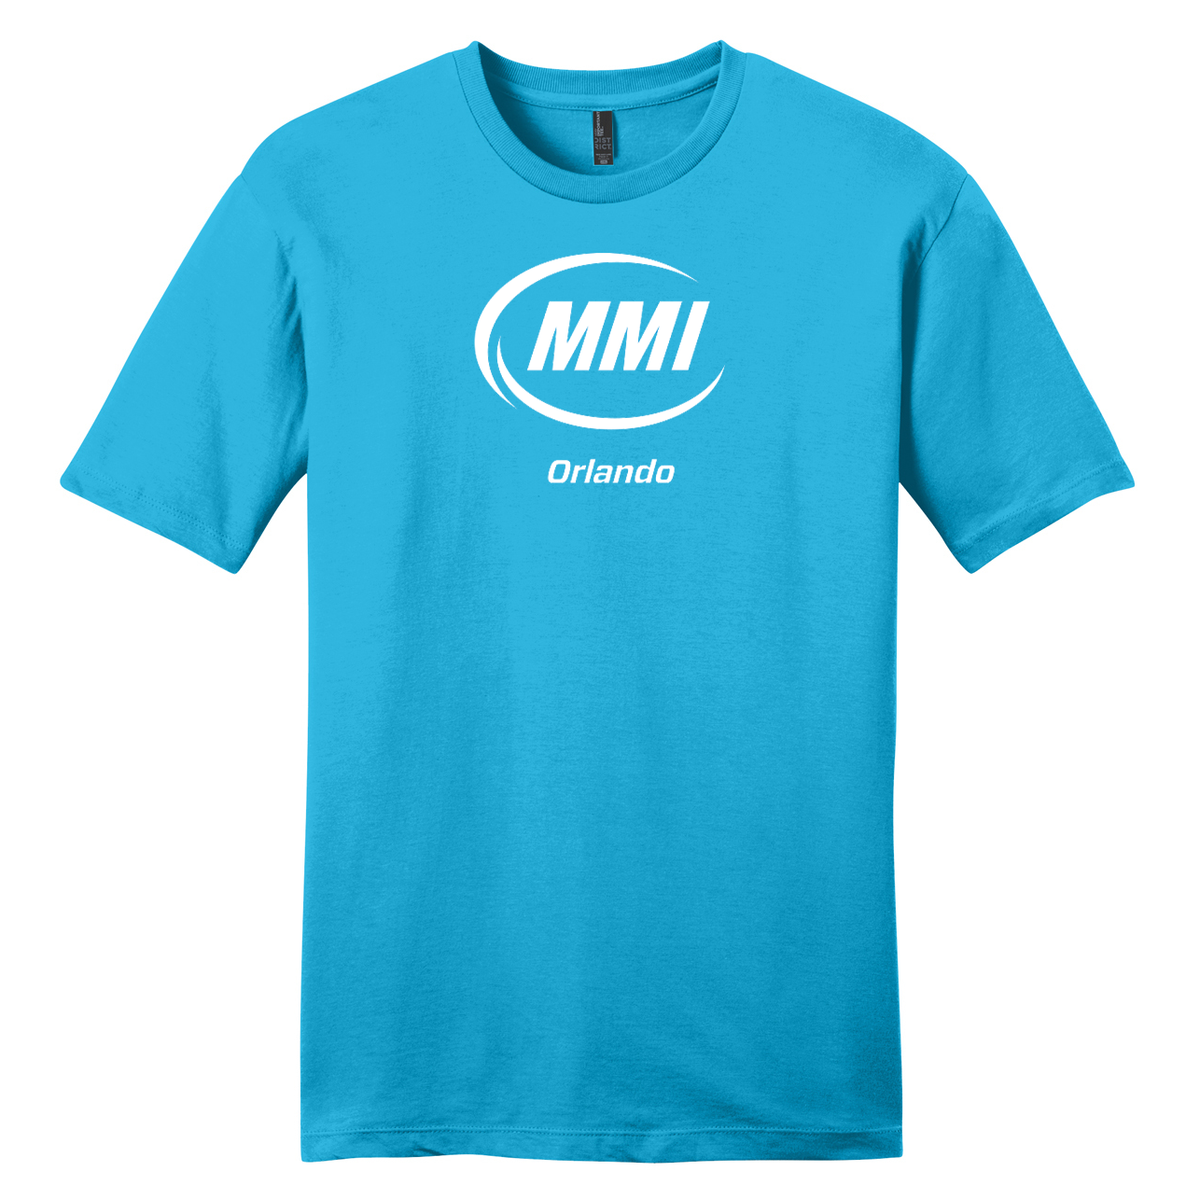 MMI (Marine) Orlando Campus T-Shirt